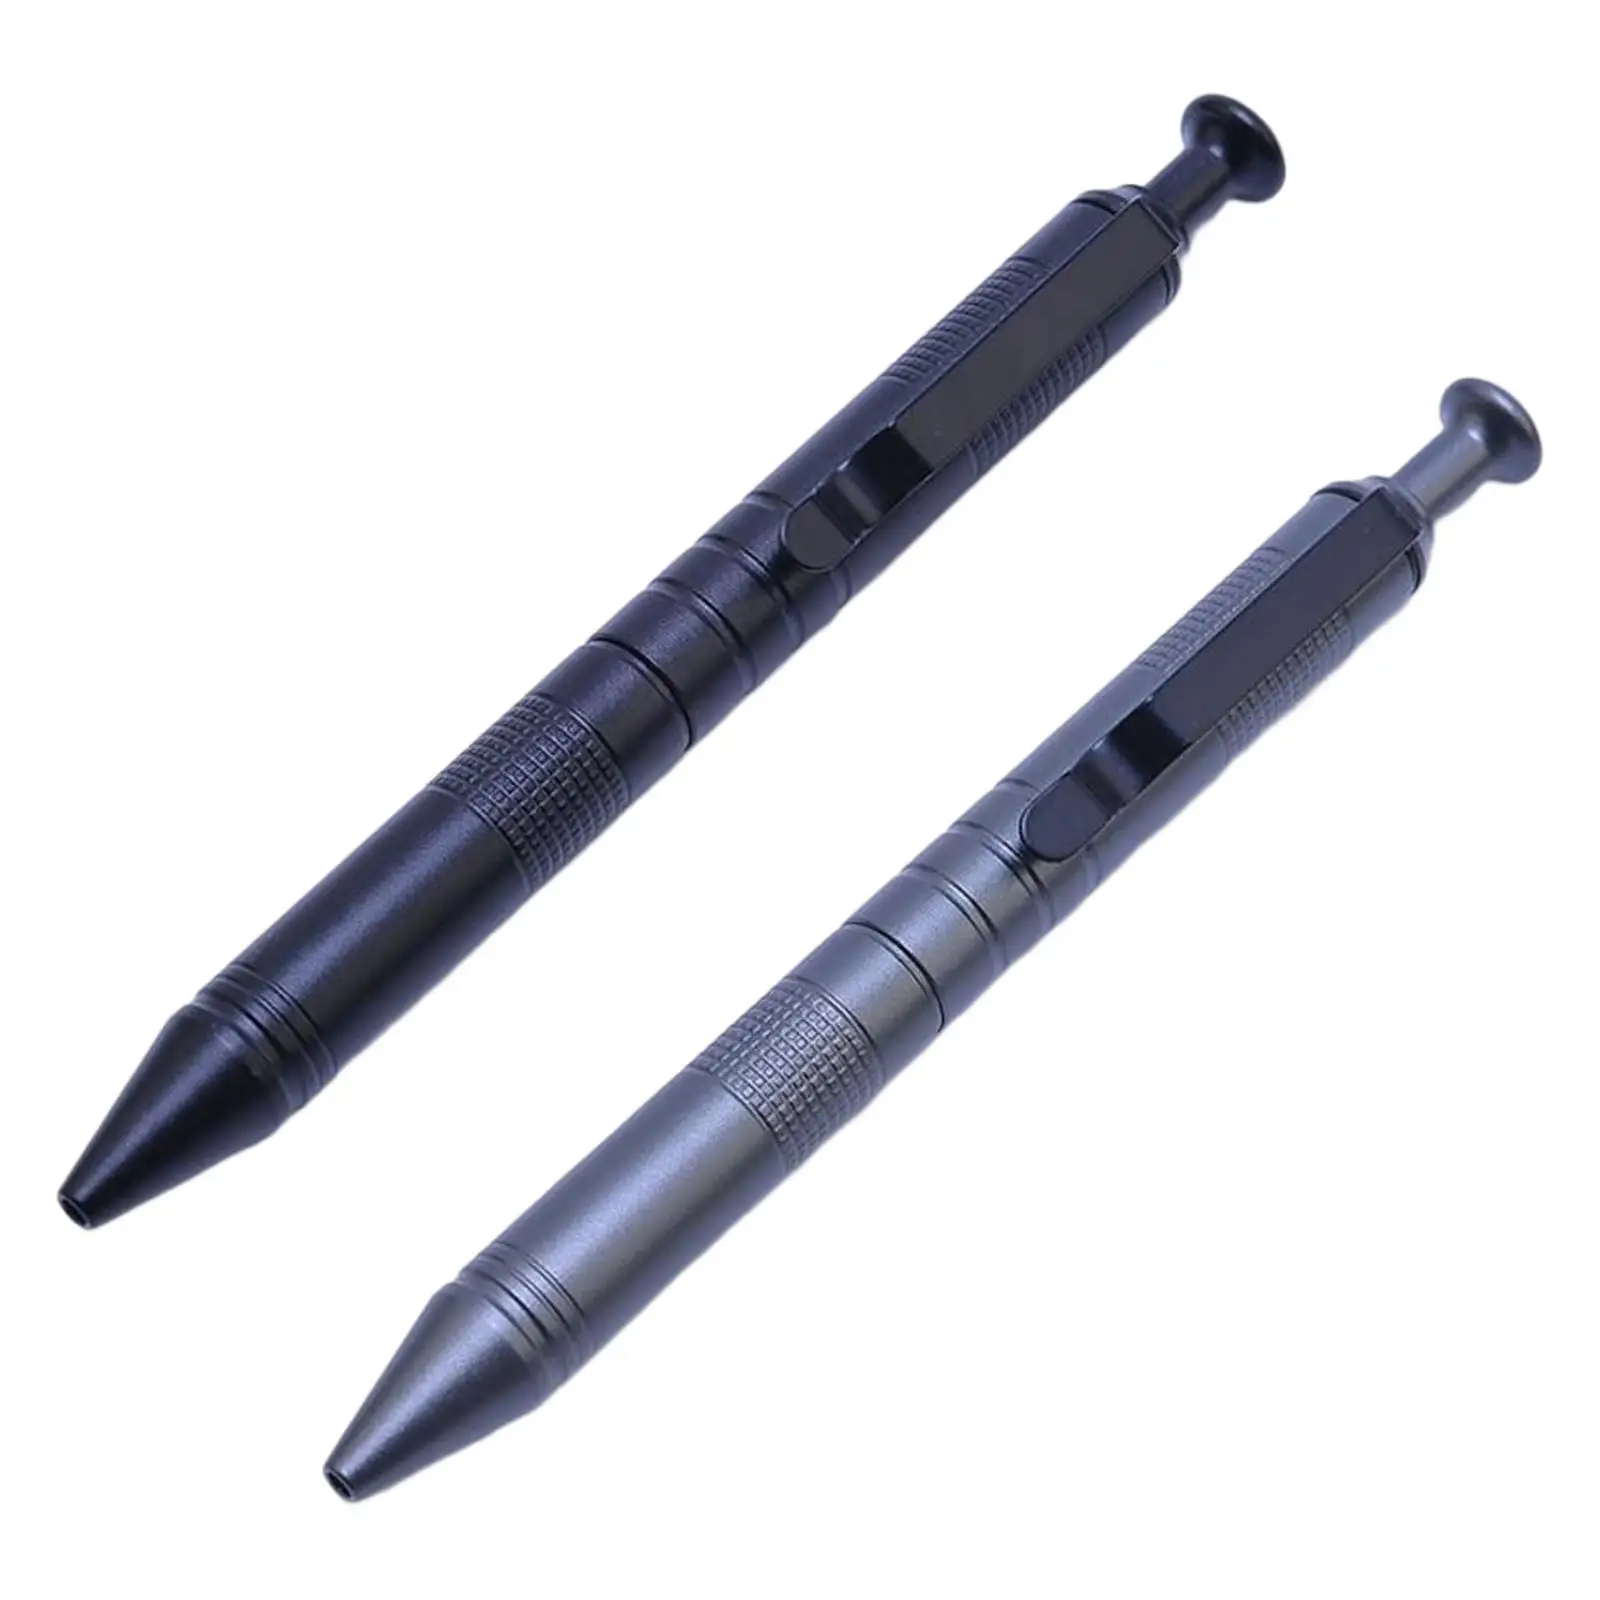 Signatures Personal Pen Glass Breaker Tool Camping Gear ploy Multifunctional Pocket Survival Sturdy emergencies Ballpoint Pen